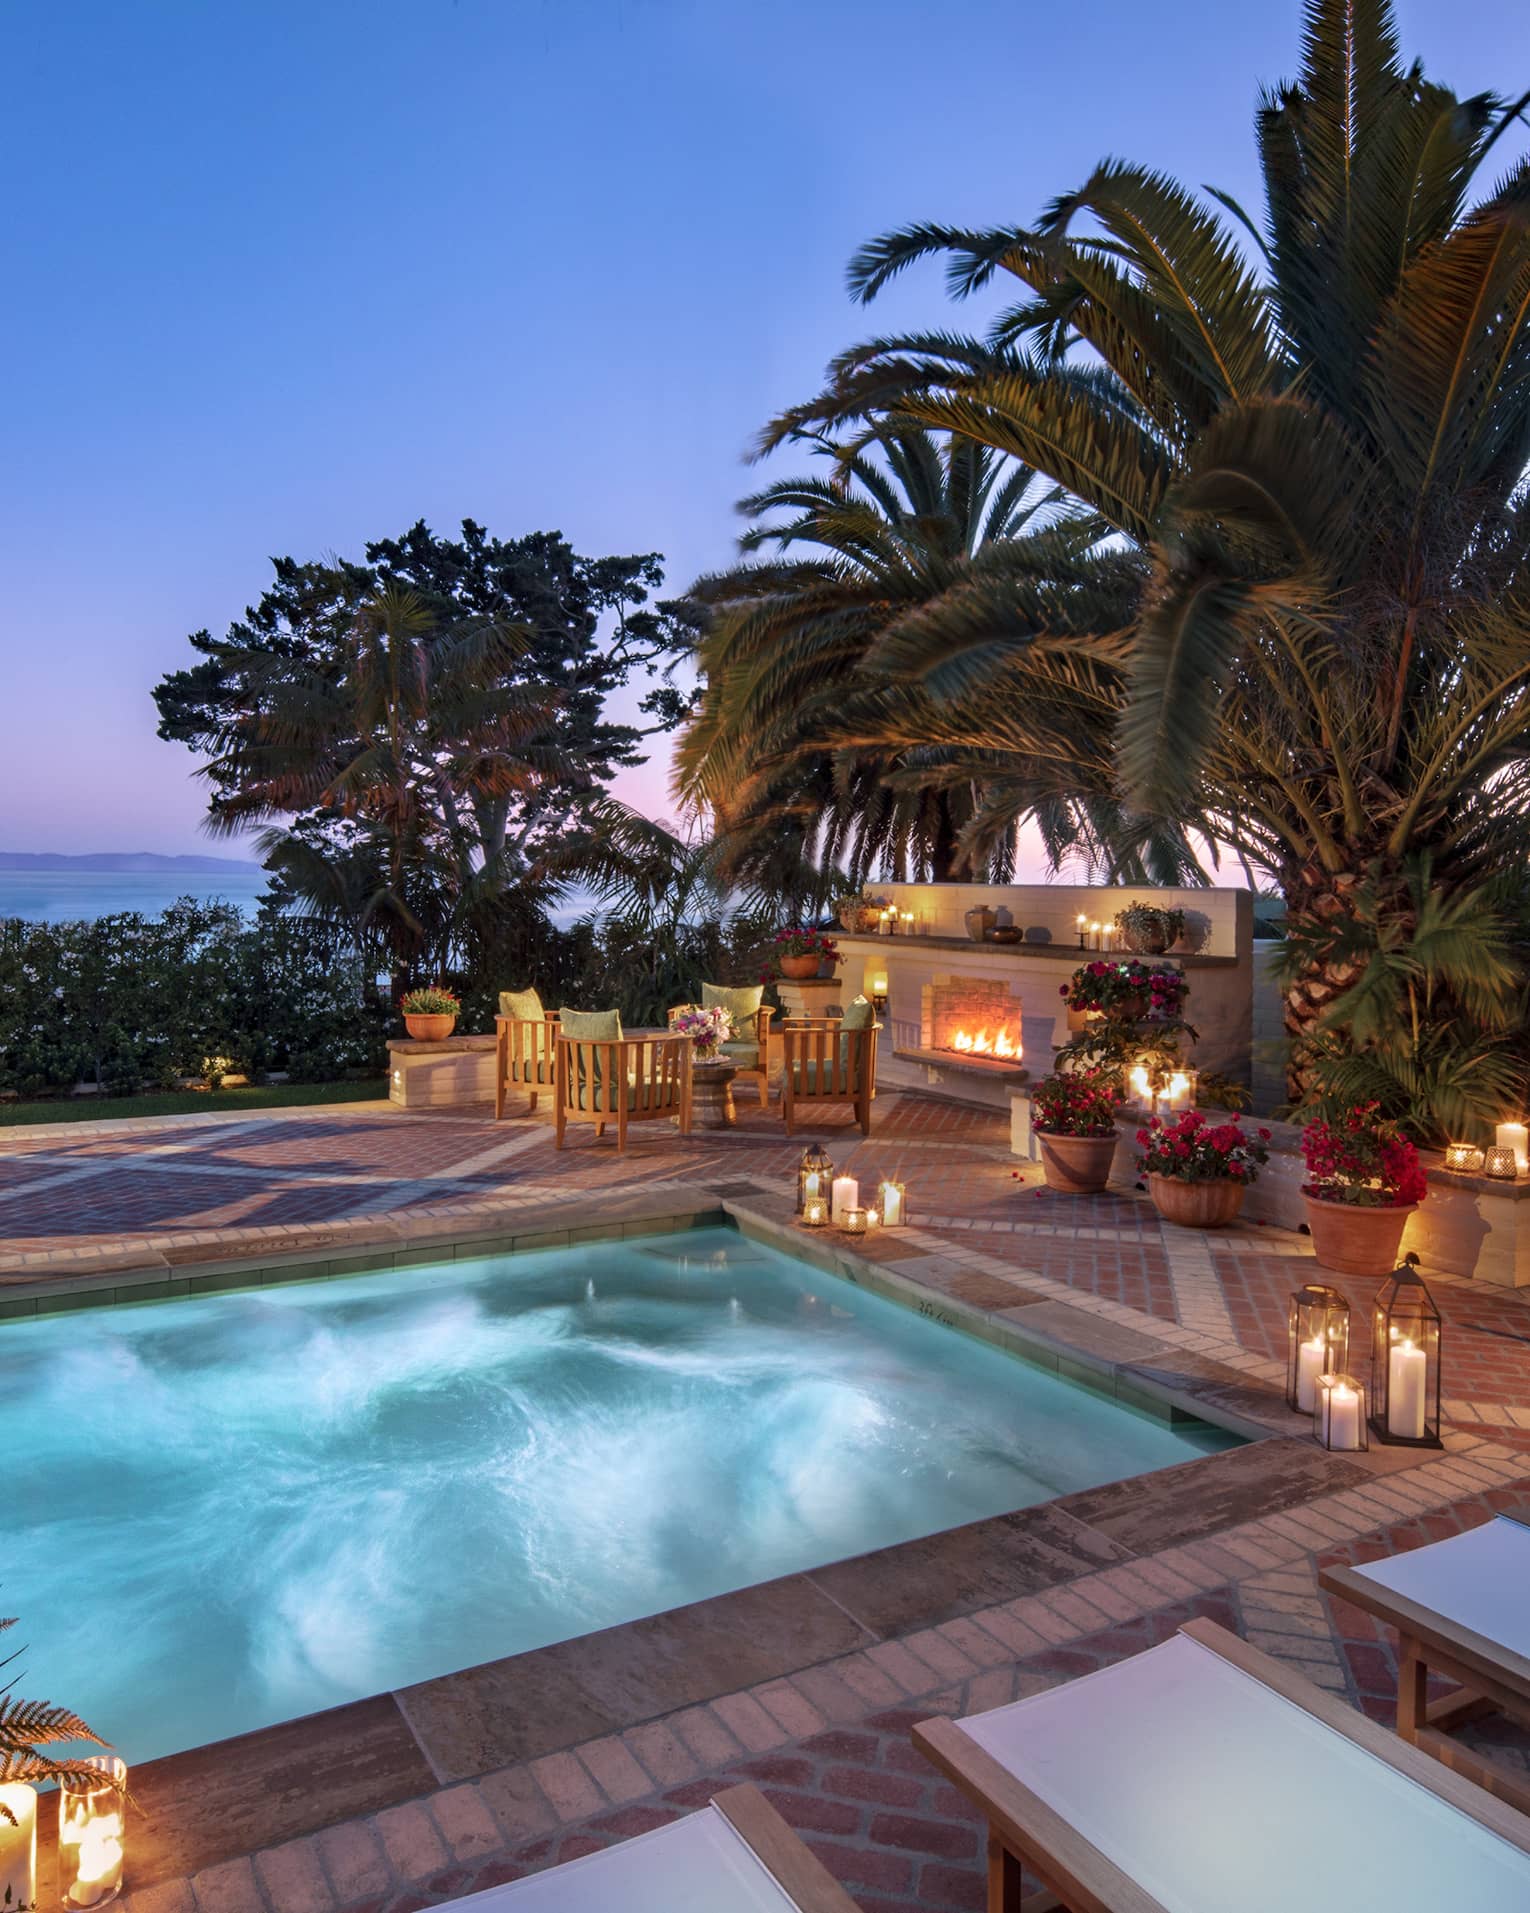 Illuminated villa plunge pool and patio, palm trees at dusk